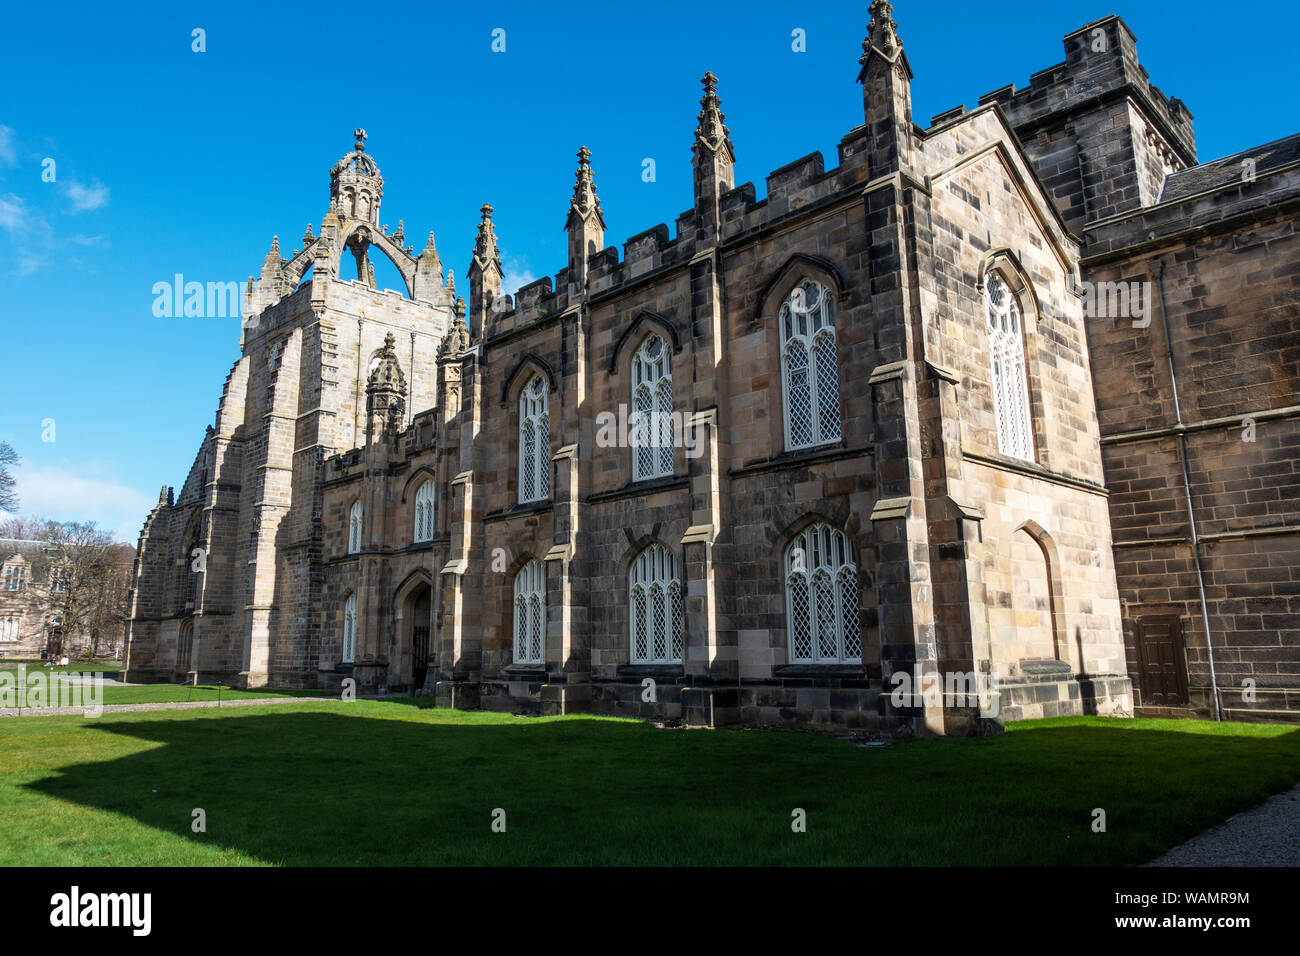 Corona la torre de la capilla de King's College, Universidad de Aberdeen, Old Aberdeen, Aberdeen, Escocia, Reino Unido Foto de stock